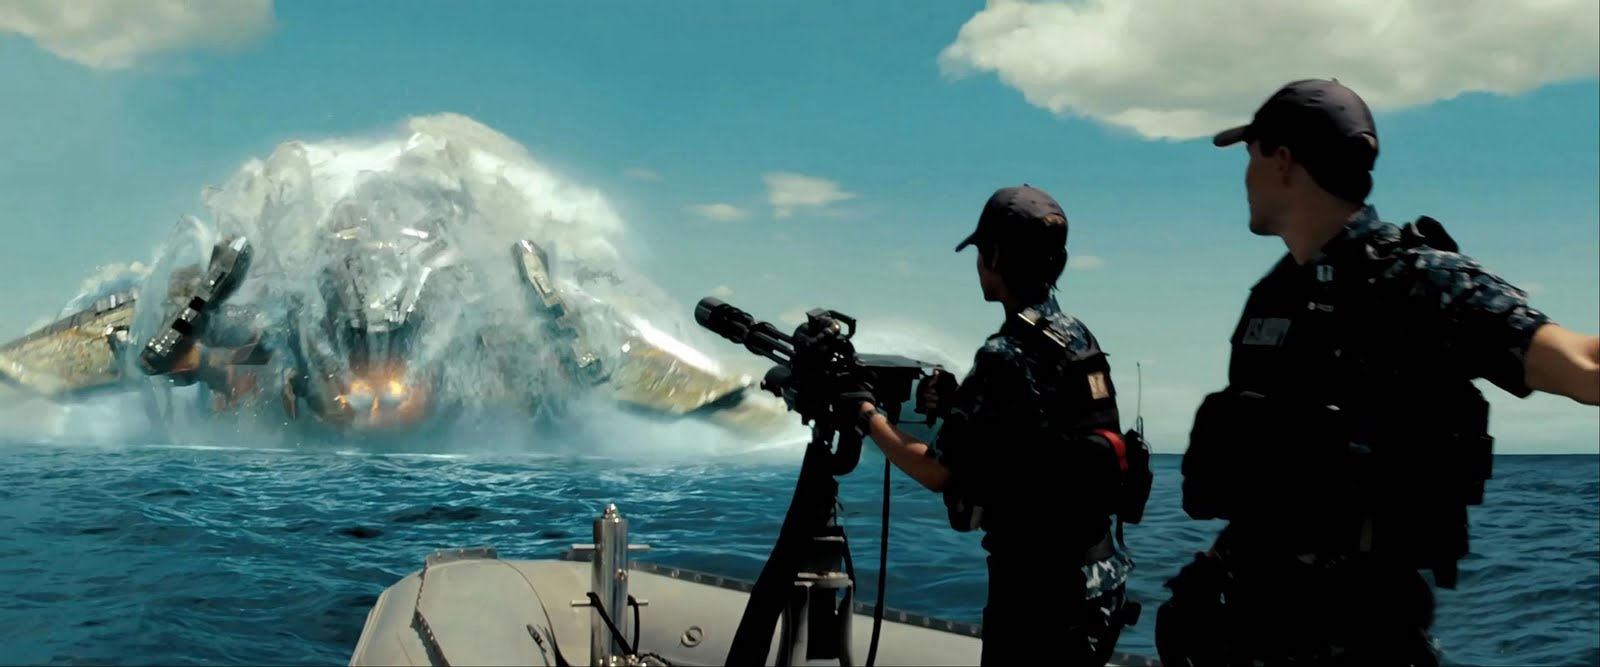 Battleship Poster HD Wallpaper Movie